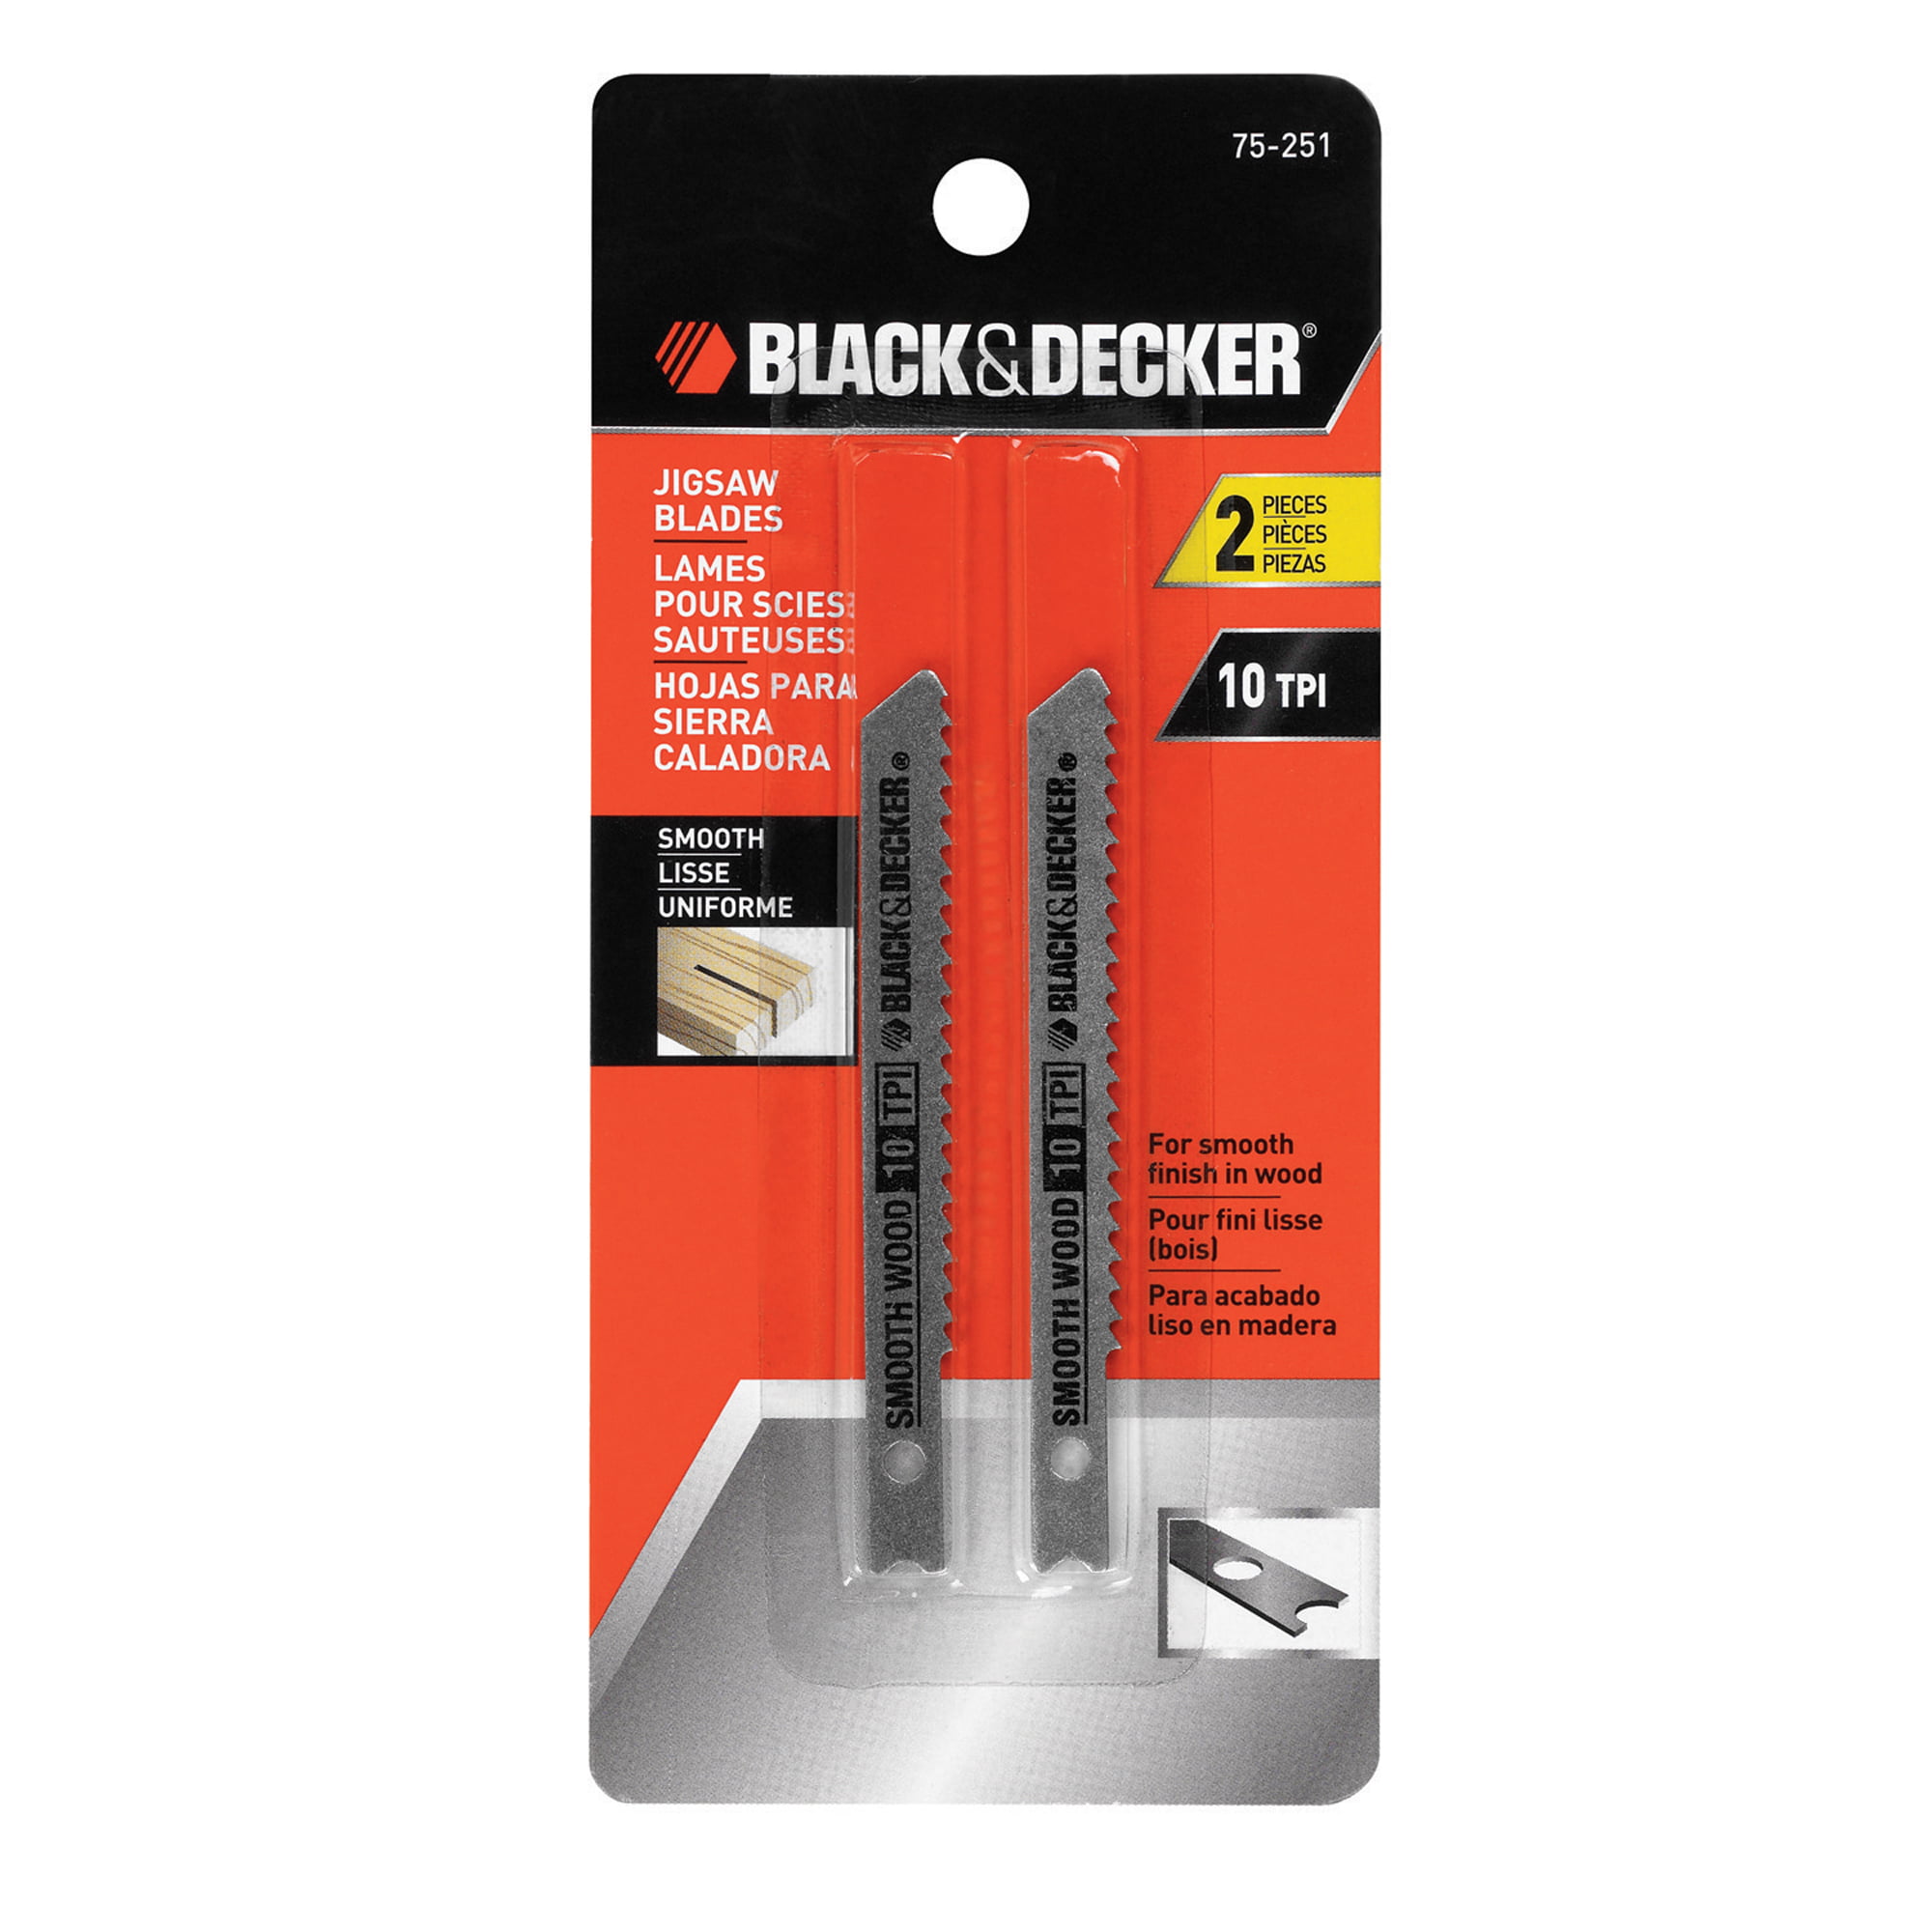 Black & Decker Jigsaw Blades, 7 Value Pack, #75-629